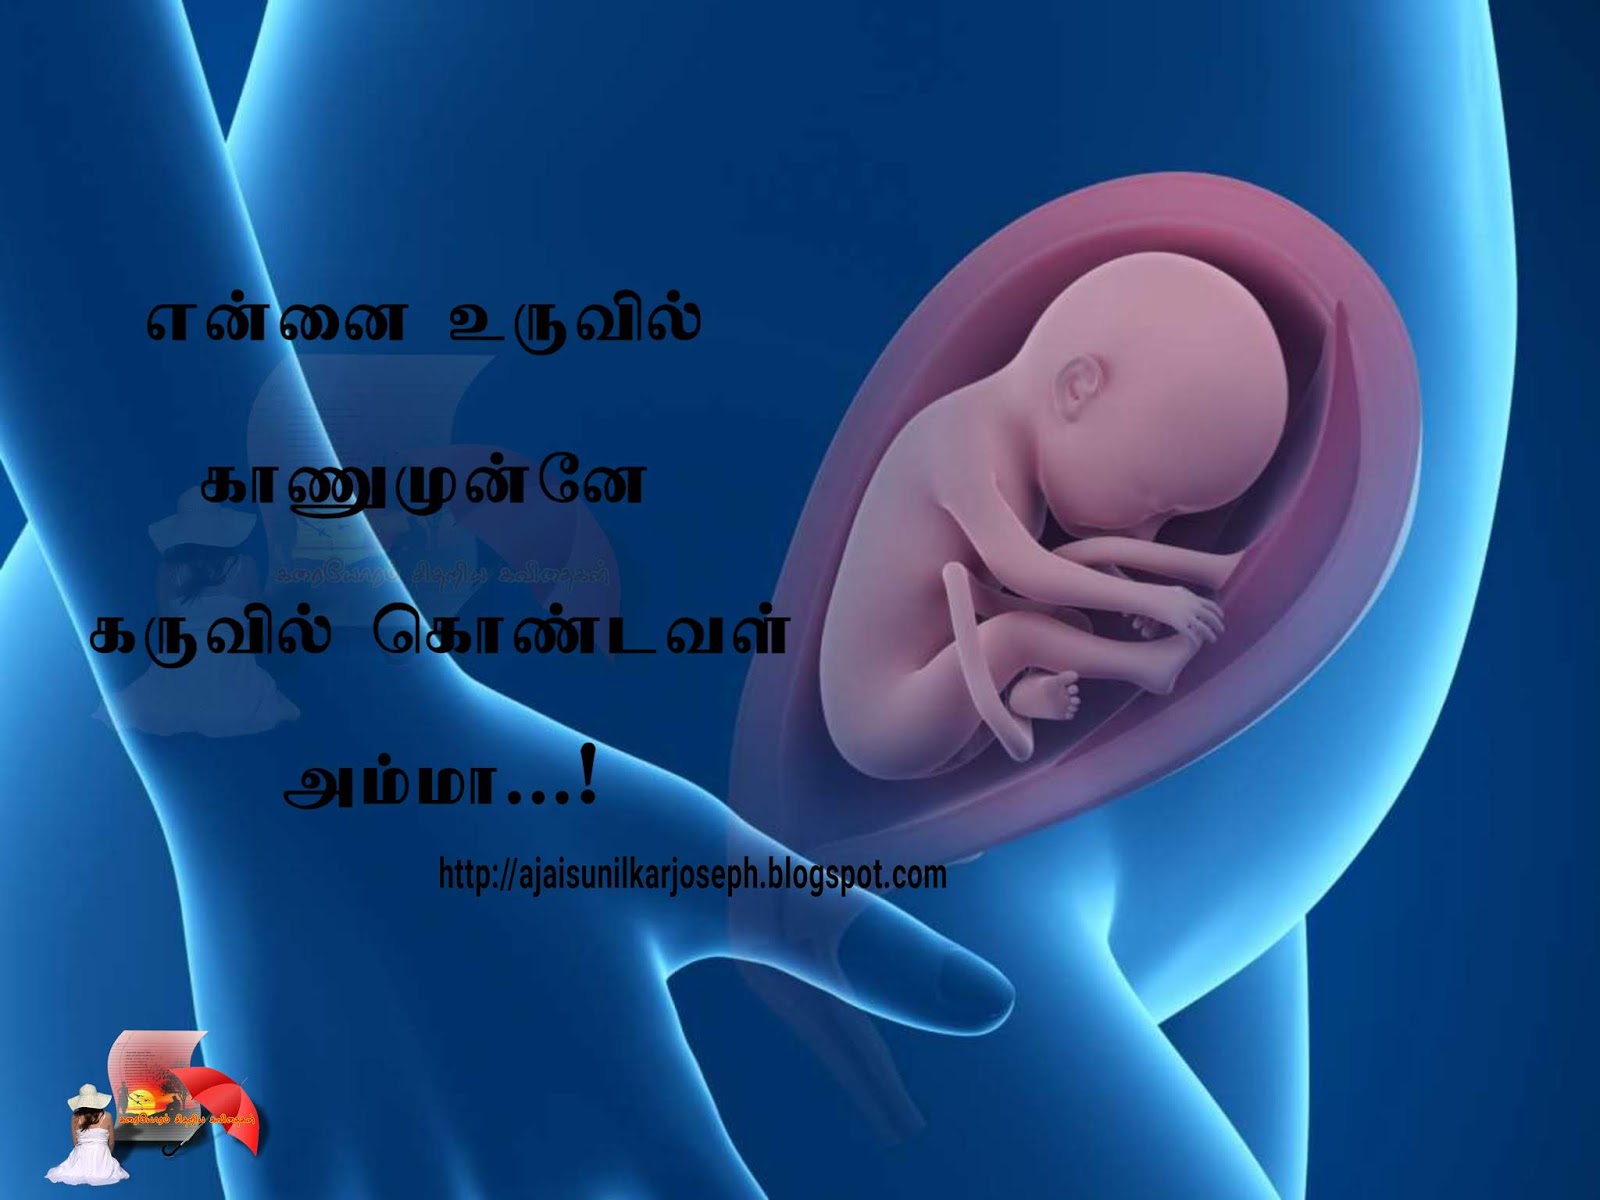 9 неделя видео. Эмбрион в утробе матери.